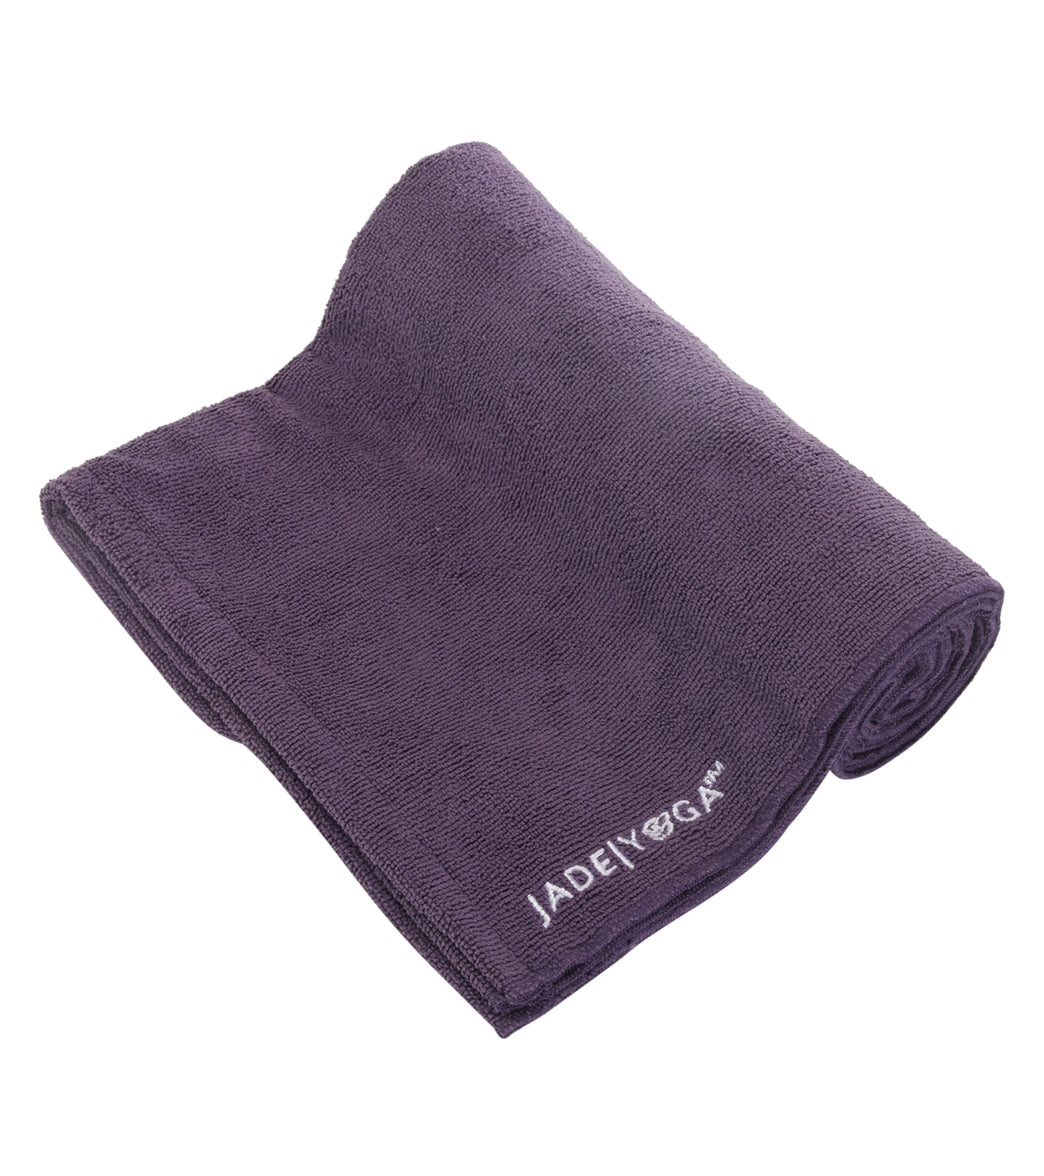 Jade Yoga Organic Yoga Towels 24x72